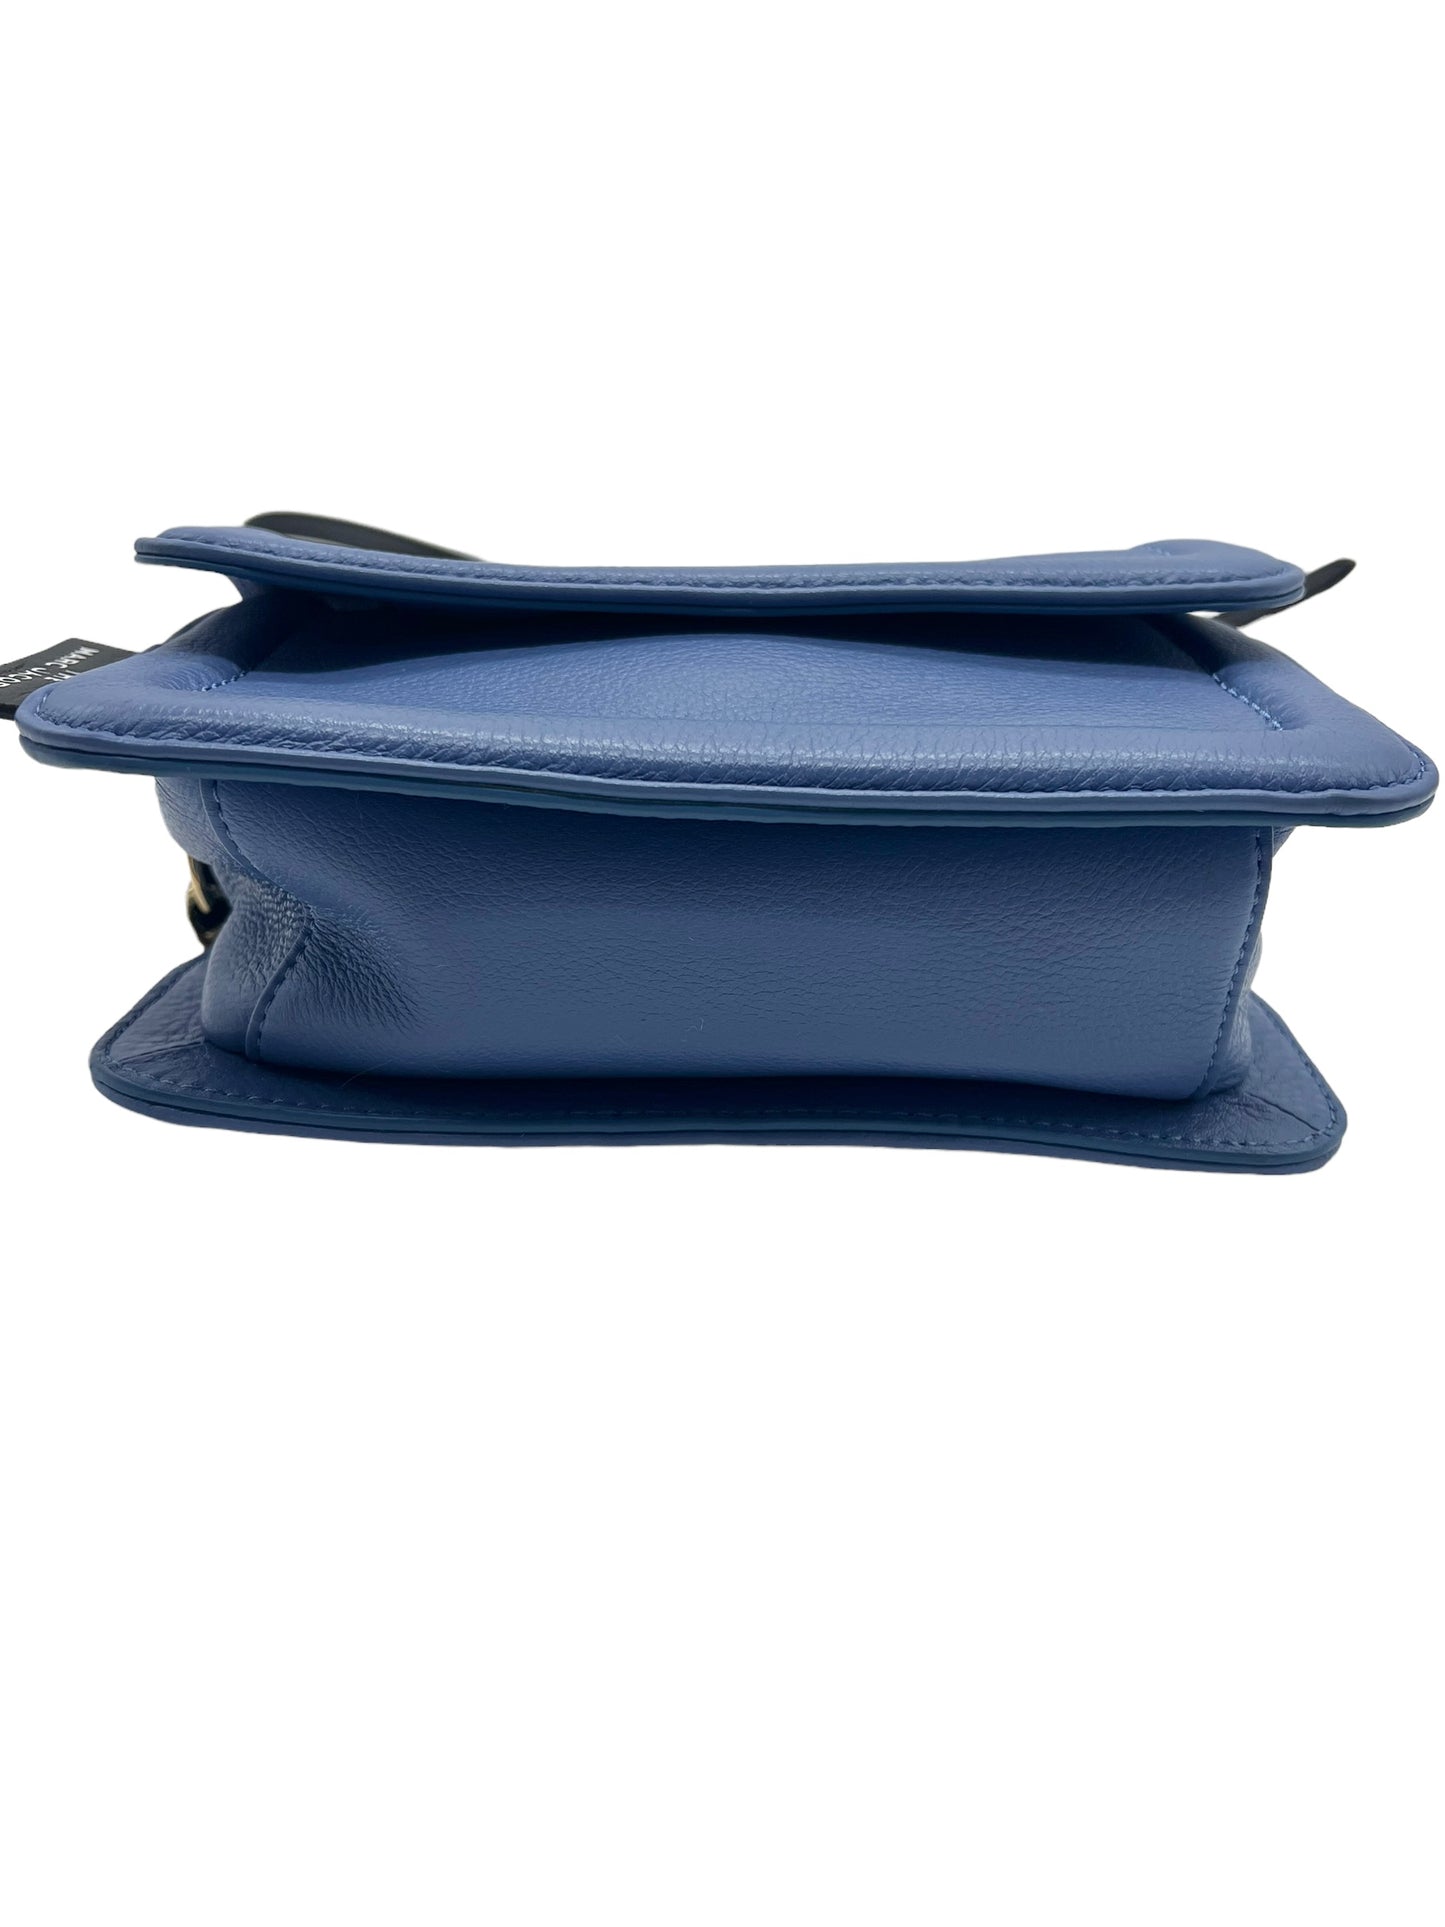 Marc Jacobs Blue Leather The Mini Cushion Bag